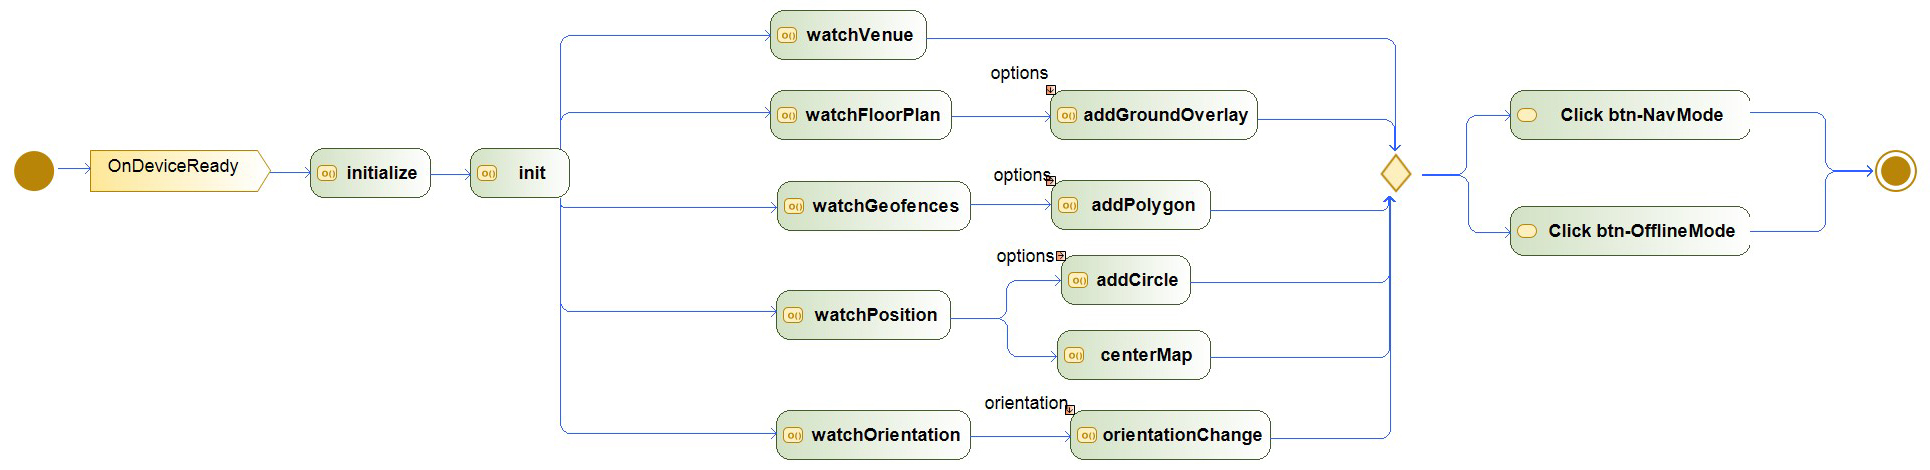 Activity diagram of application start. watchVenue, watch-FloorPlan, watchGeofences, watchPosition and watchOrienta-tion are IndoorAtlas methods while addGroundOverlay, ad-dPolygon, addCircle are Google Maps methods.